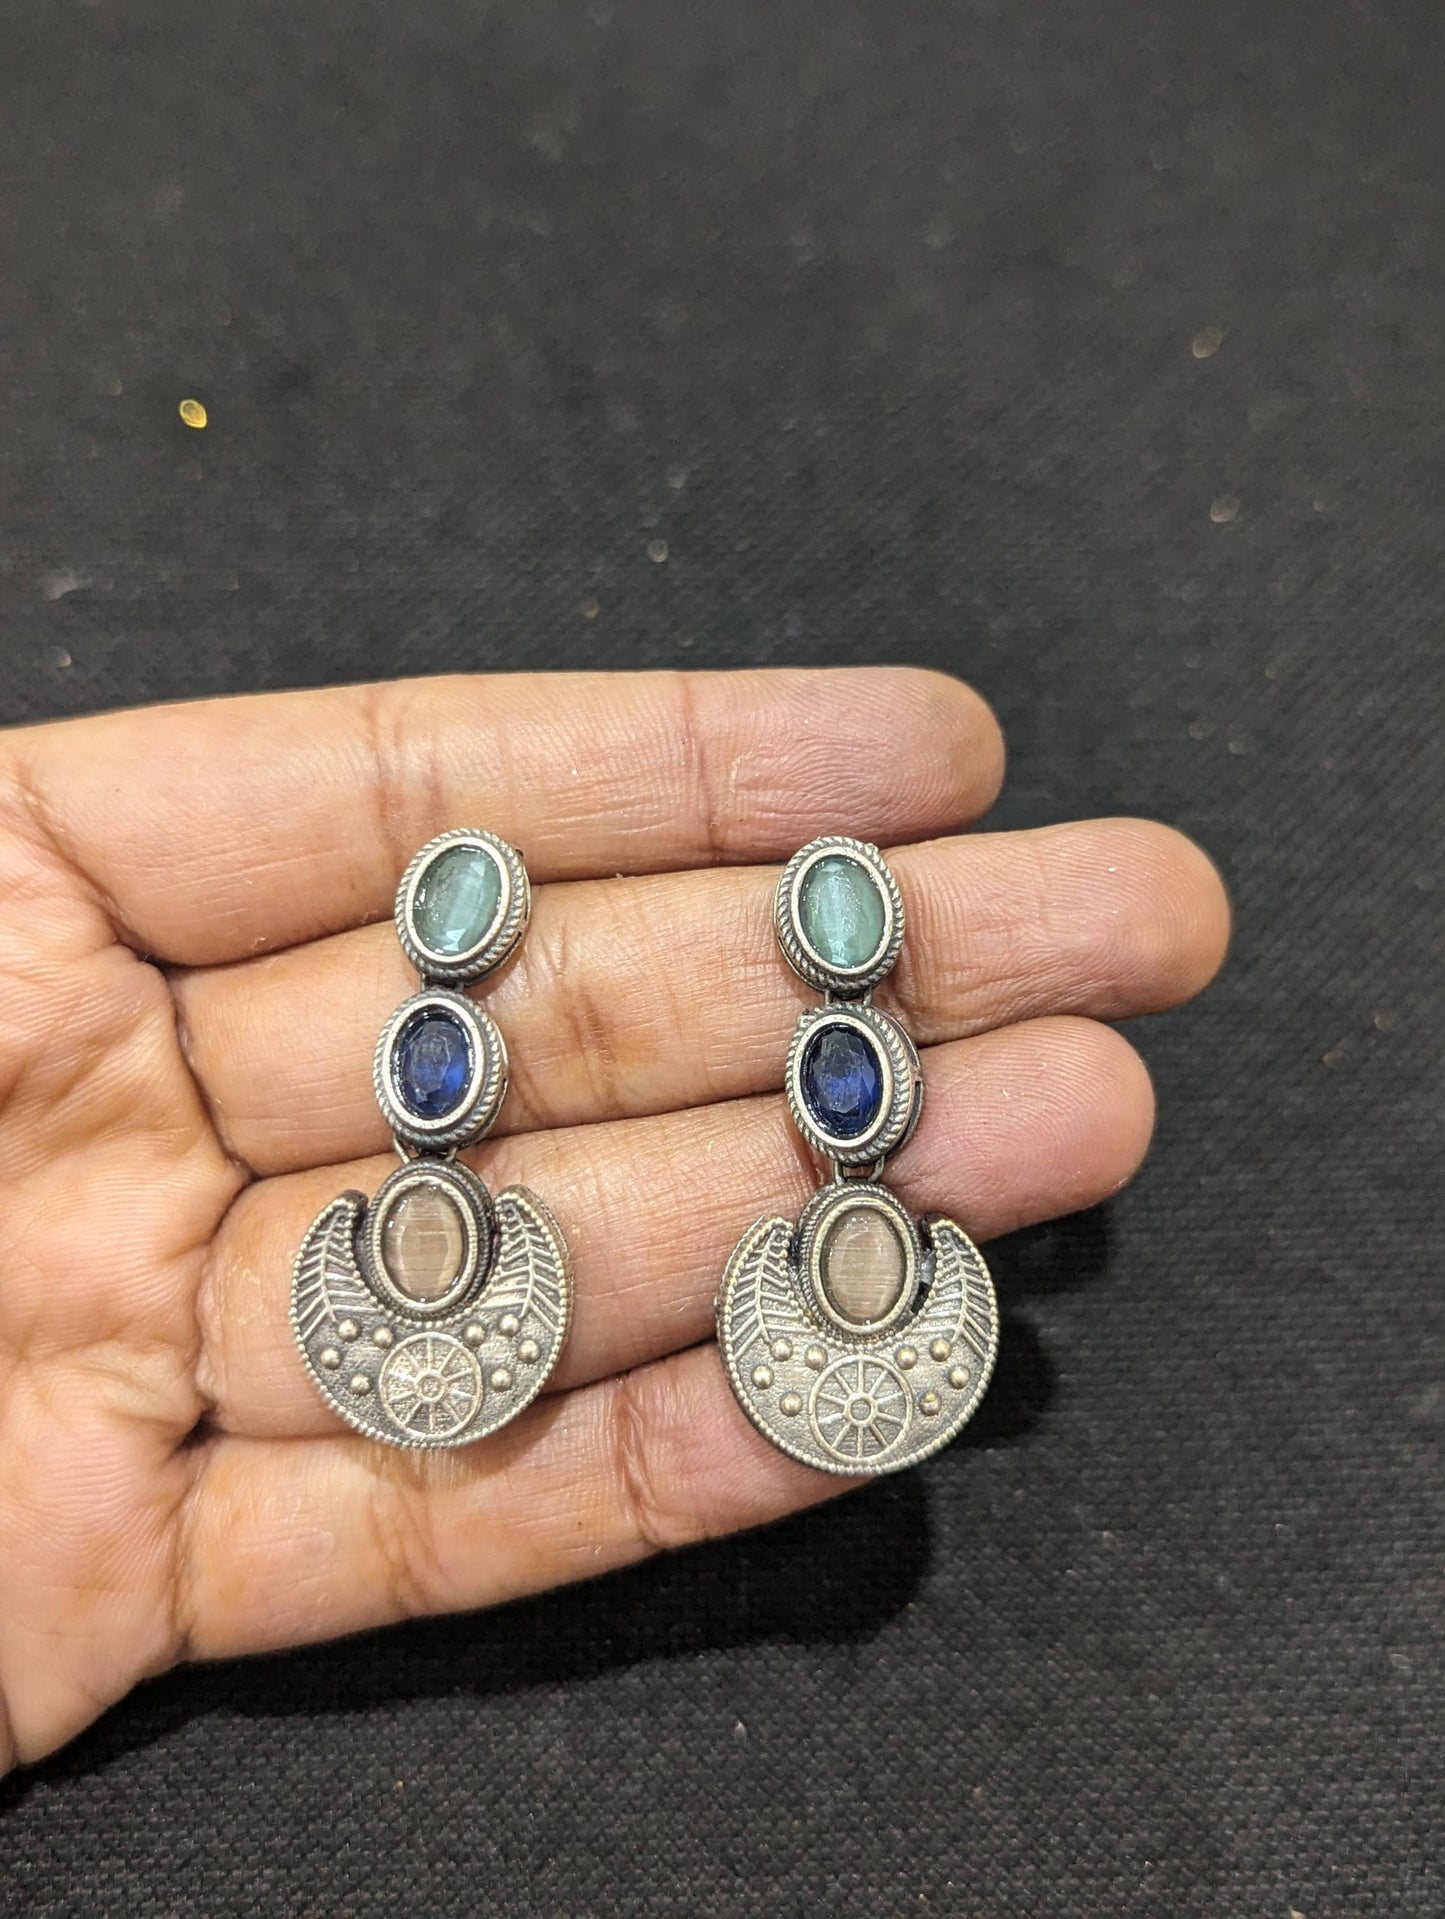 Oxidized silver Dual line Choker Necklace Set